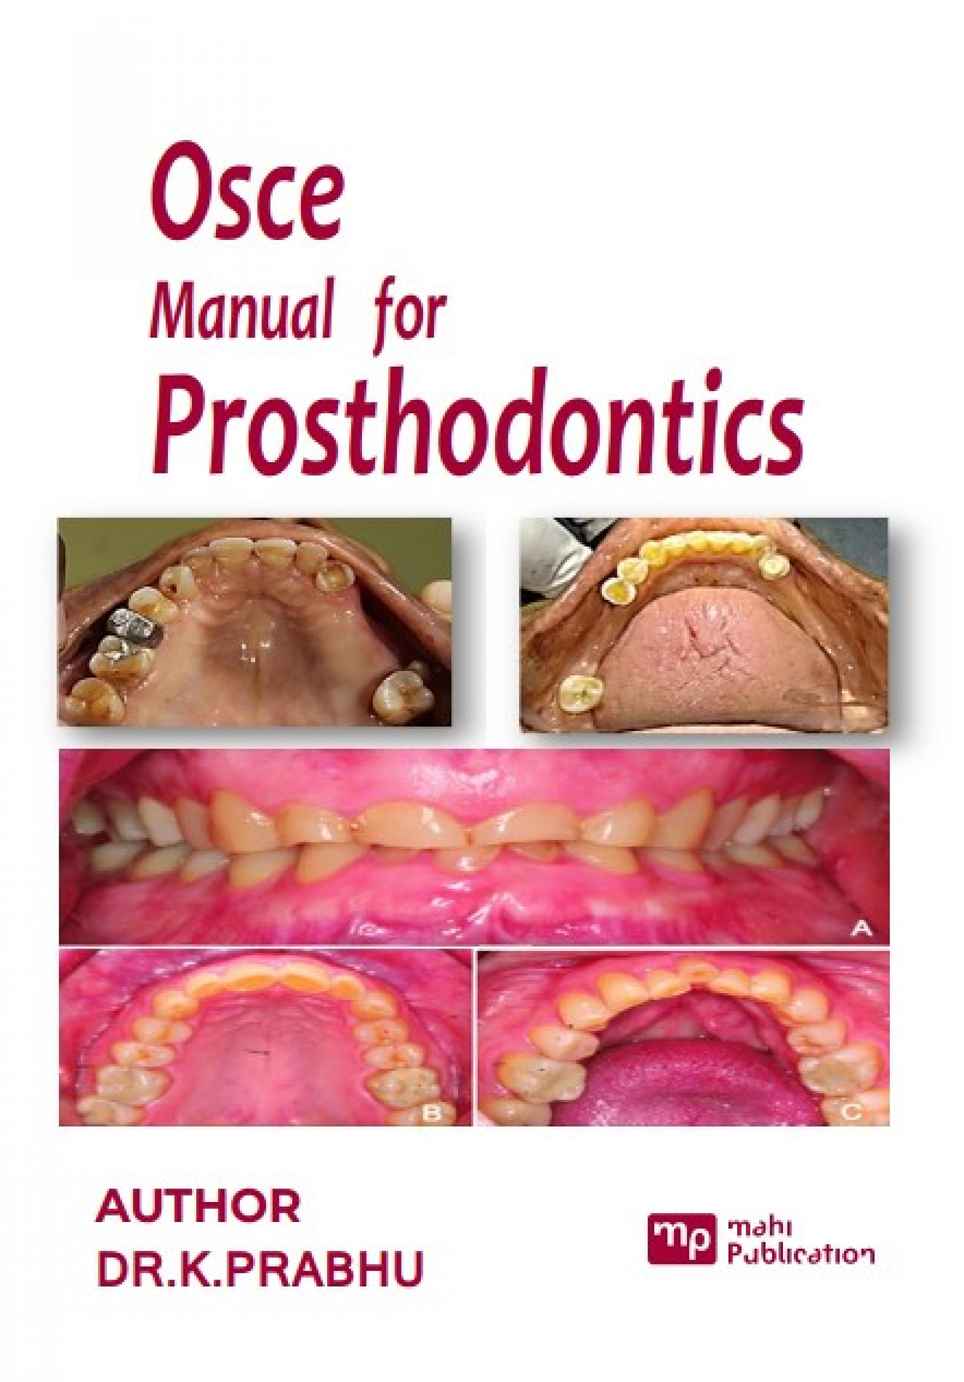 OSCE Manual for Prosthodontics